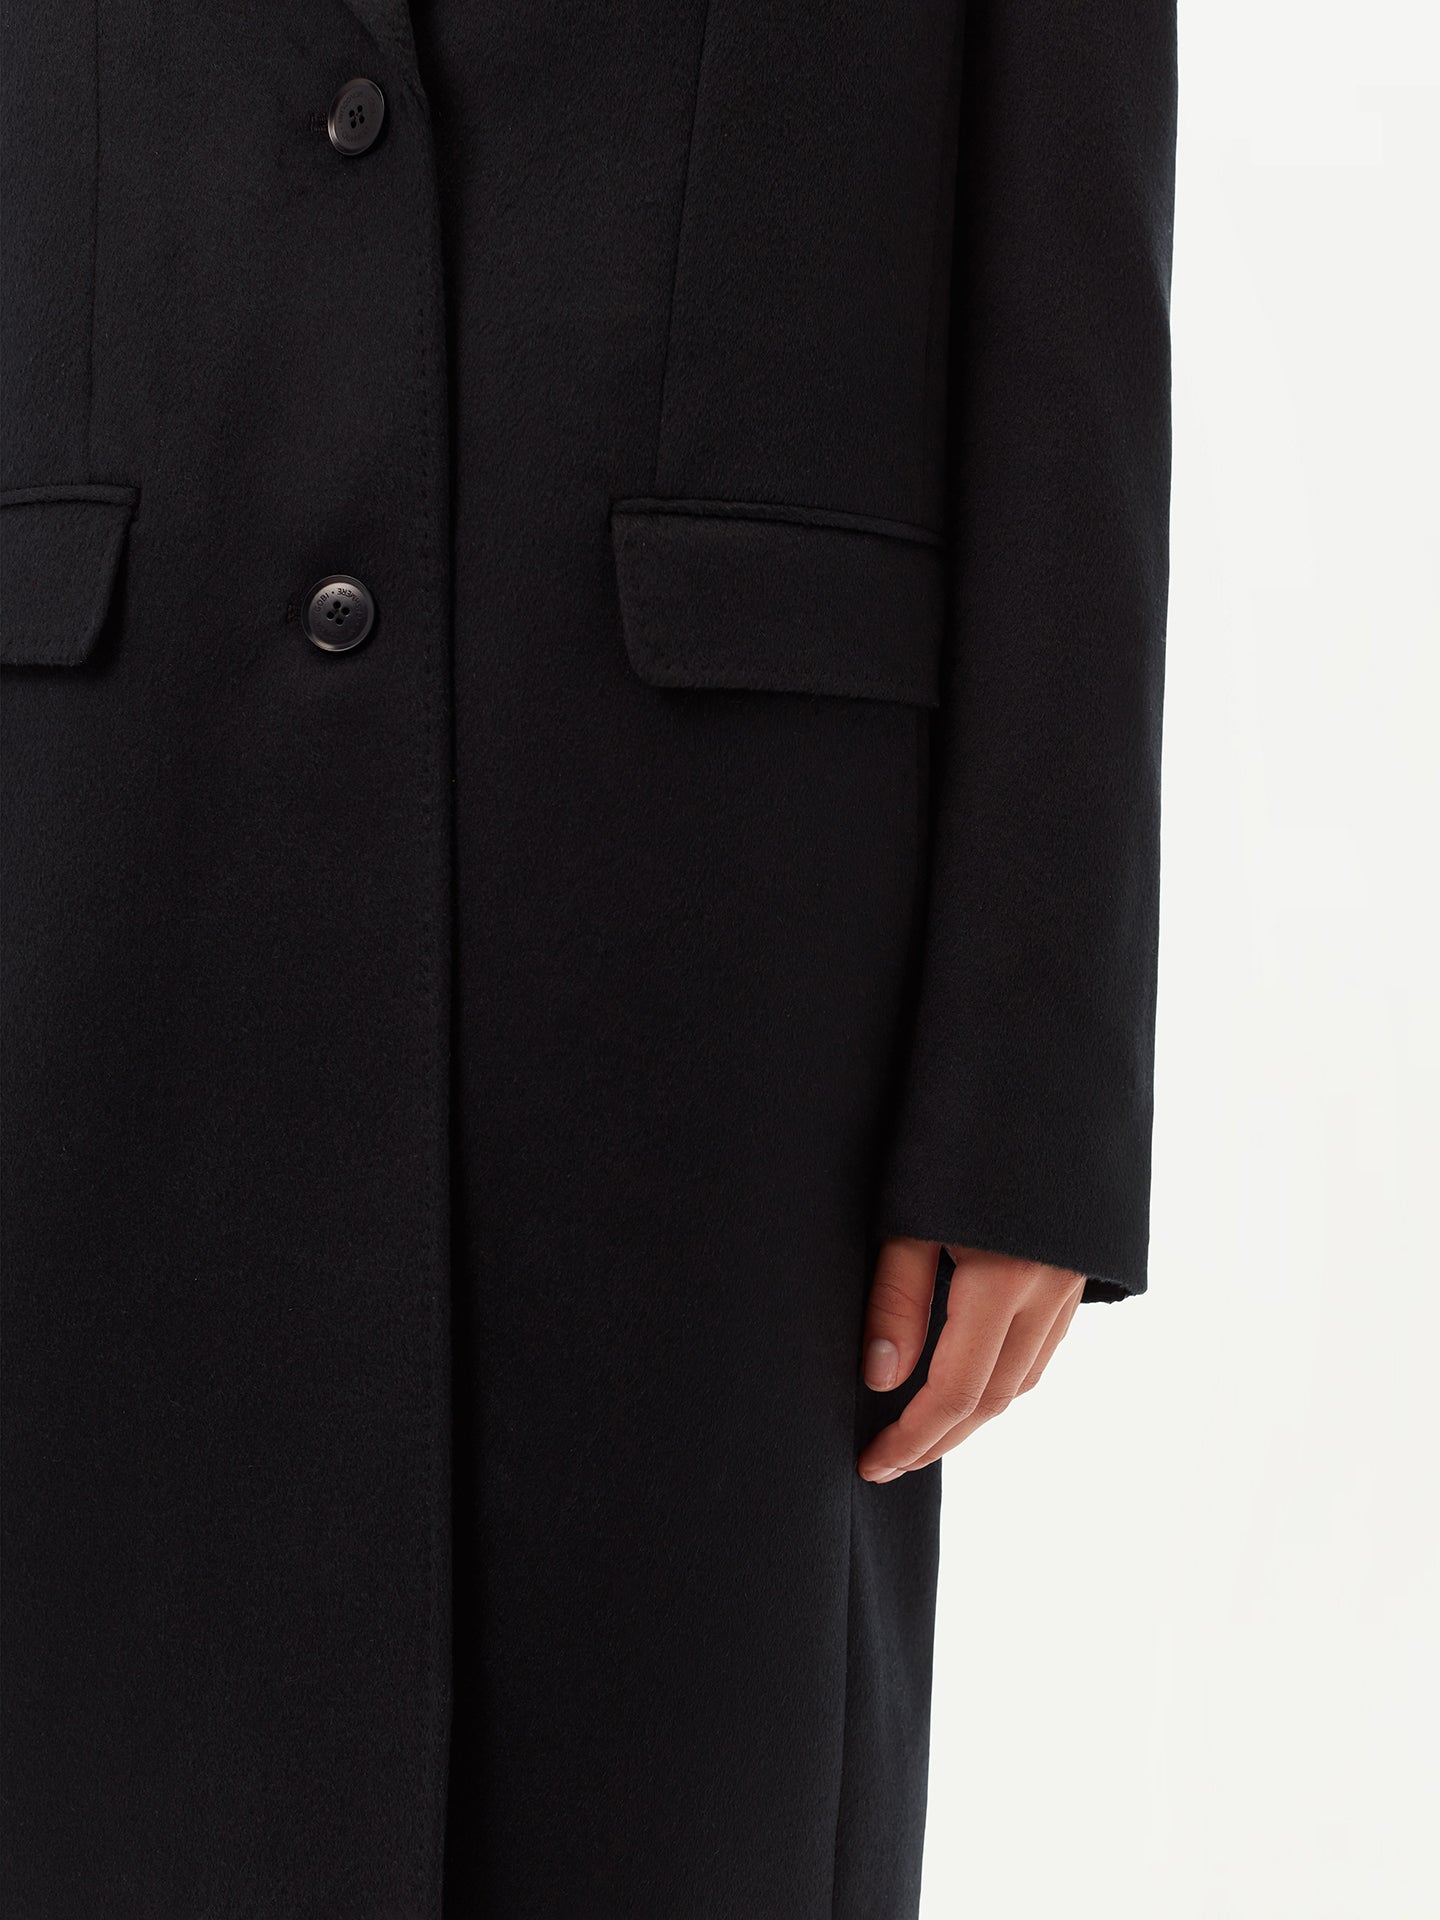 Women's Cashmere Coat with Notched Lapel Black - Gobi Cashmere 